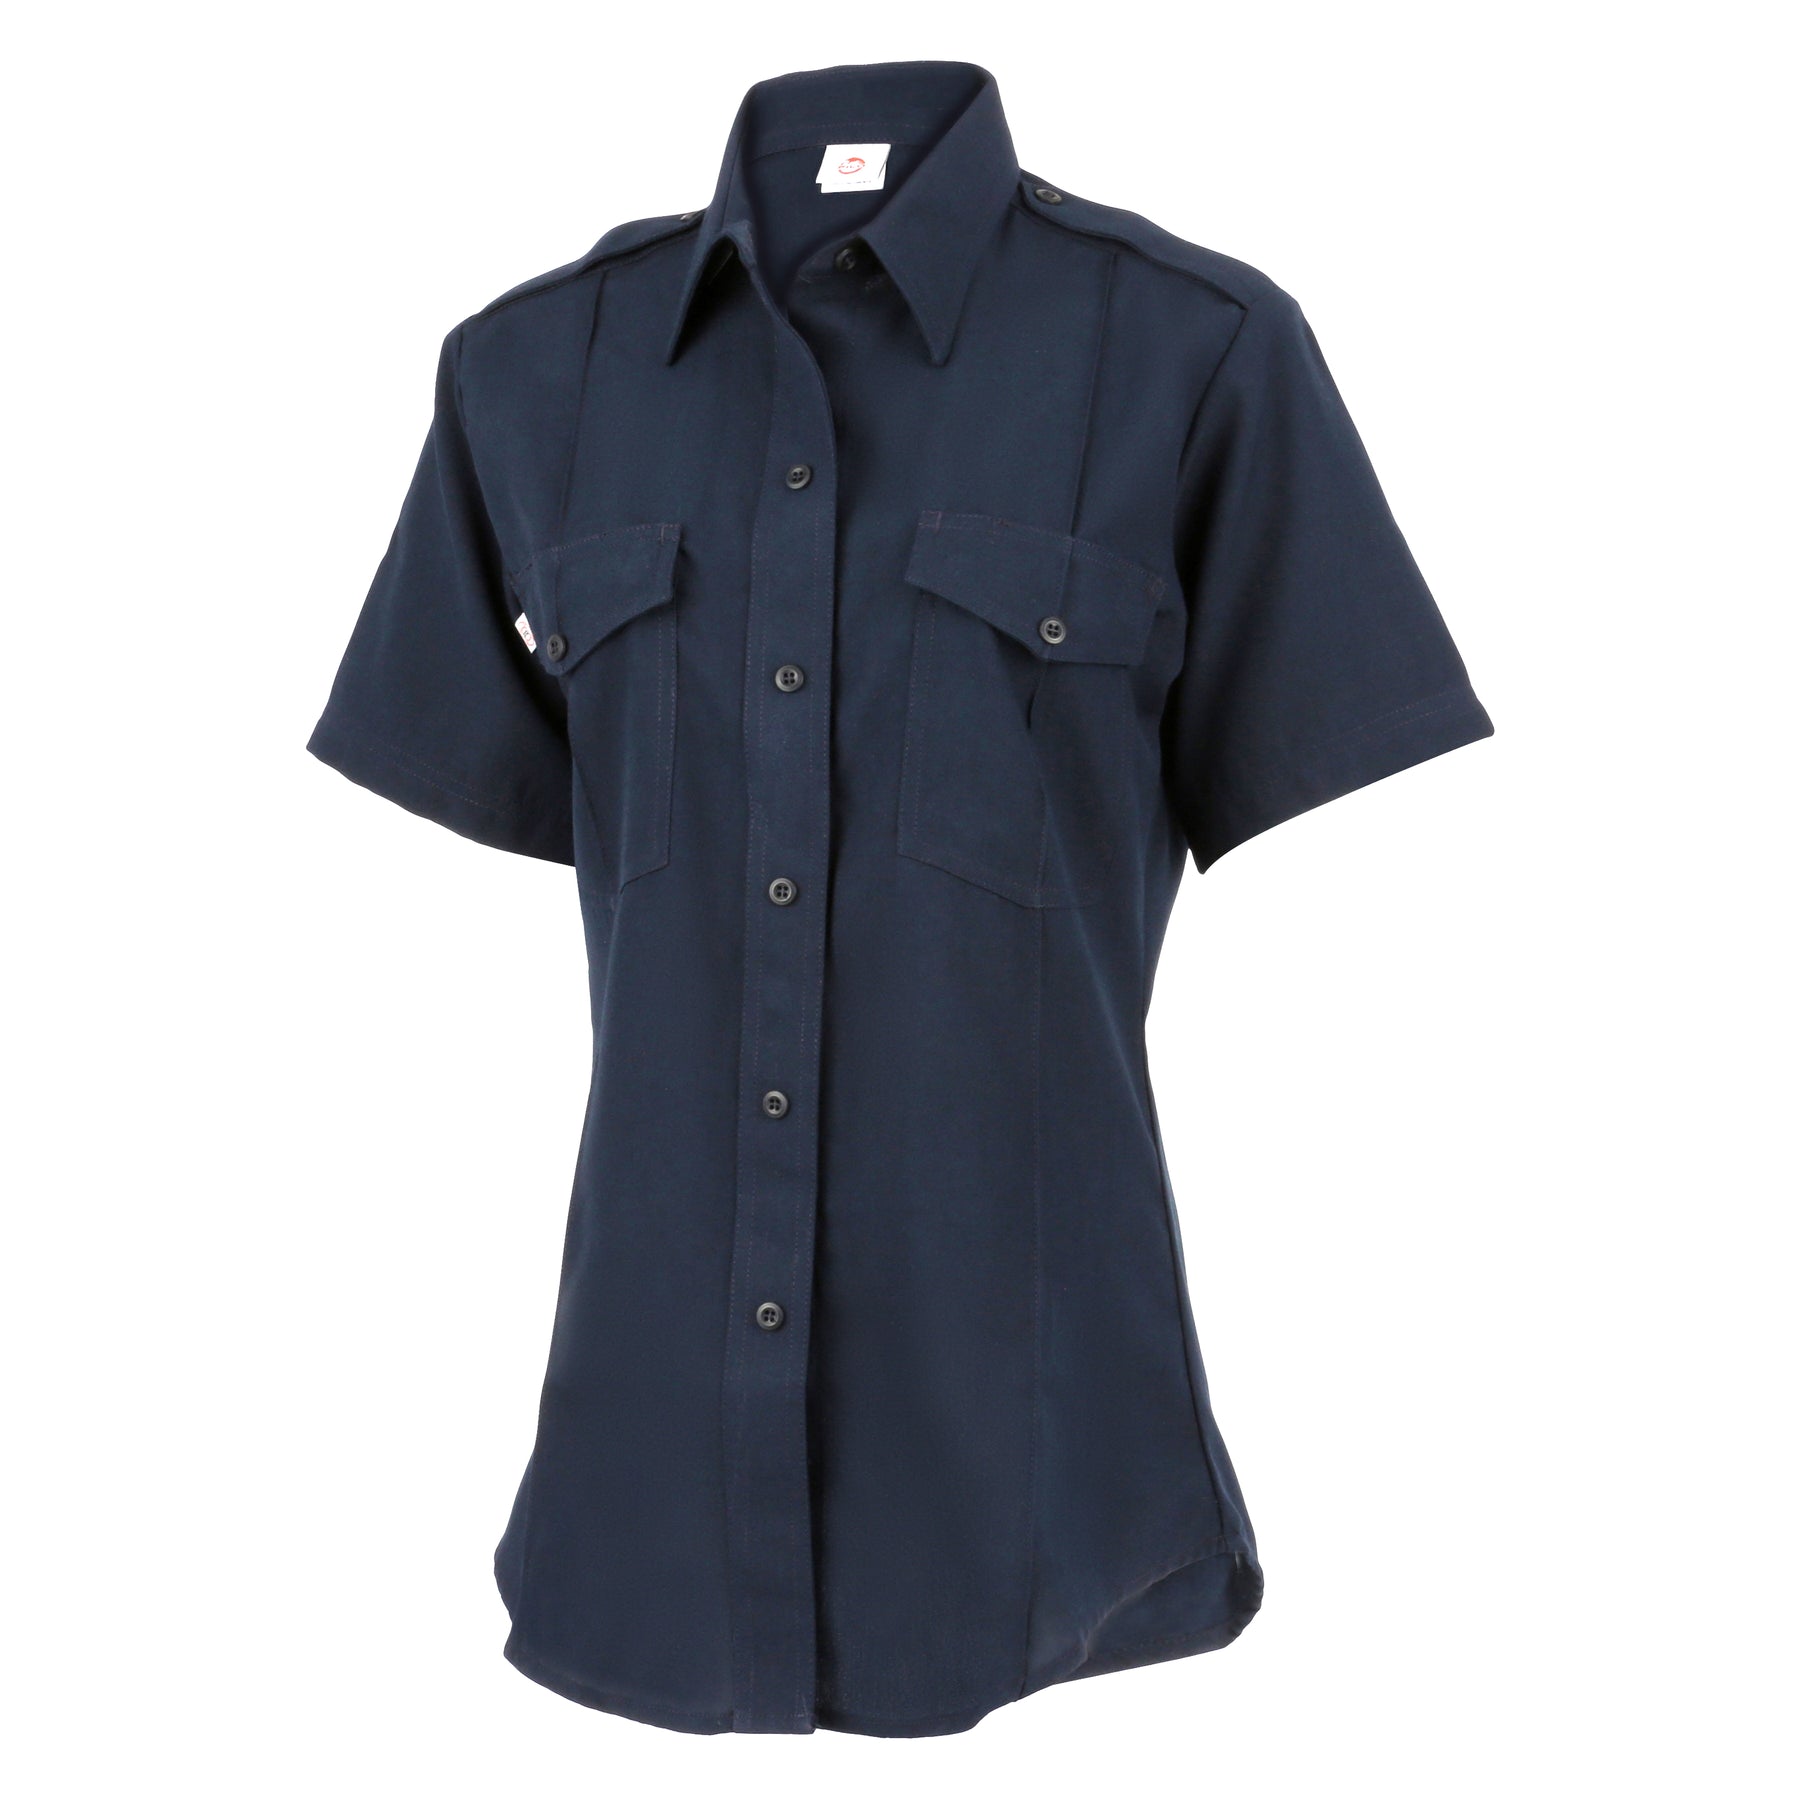 Women's Fire Station Shirt, Women's Long Sleeve Nomex Shirt | FILO Apparel